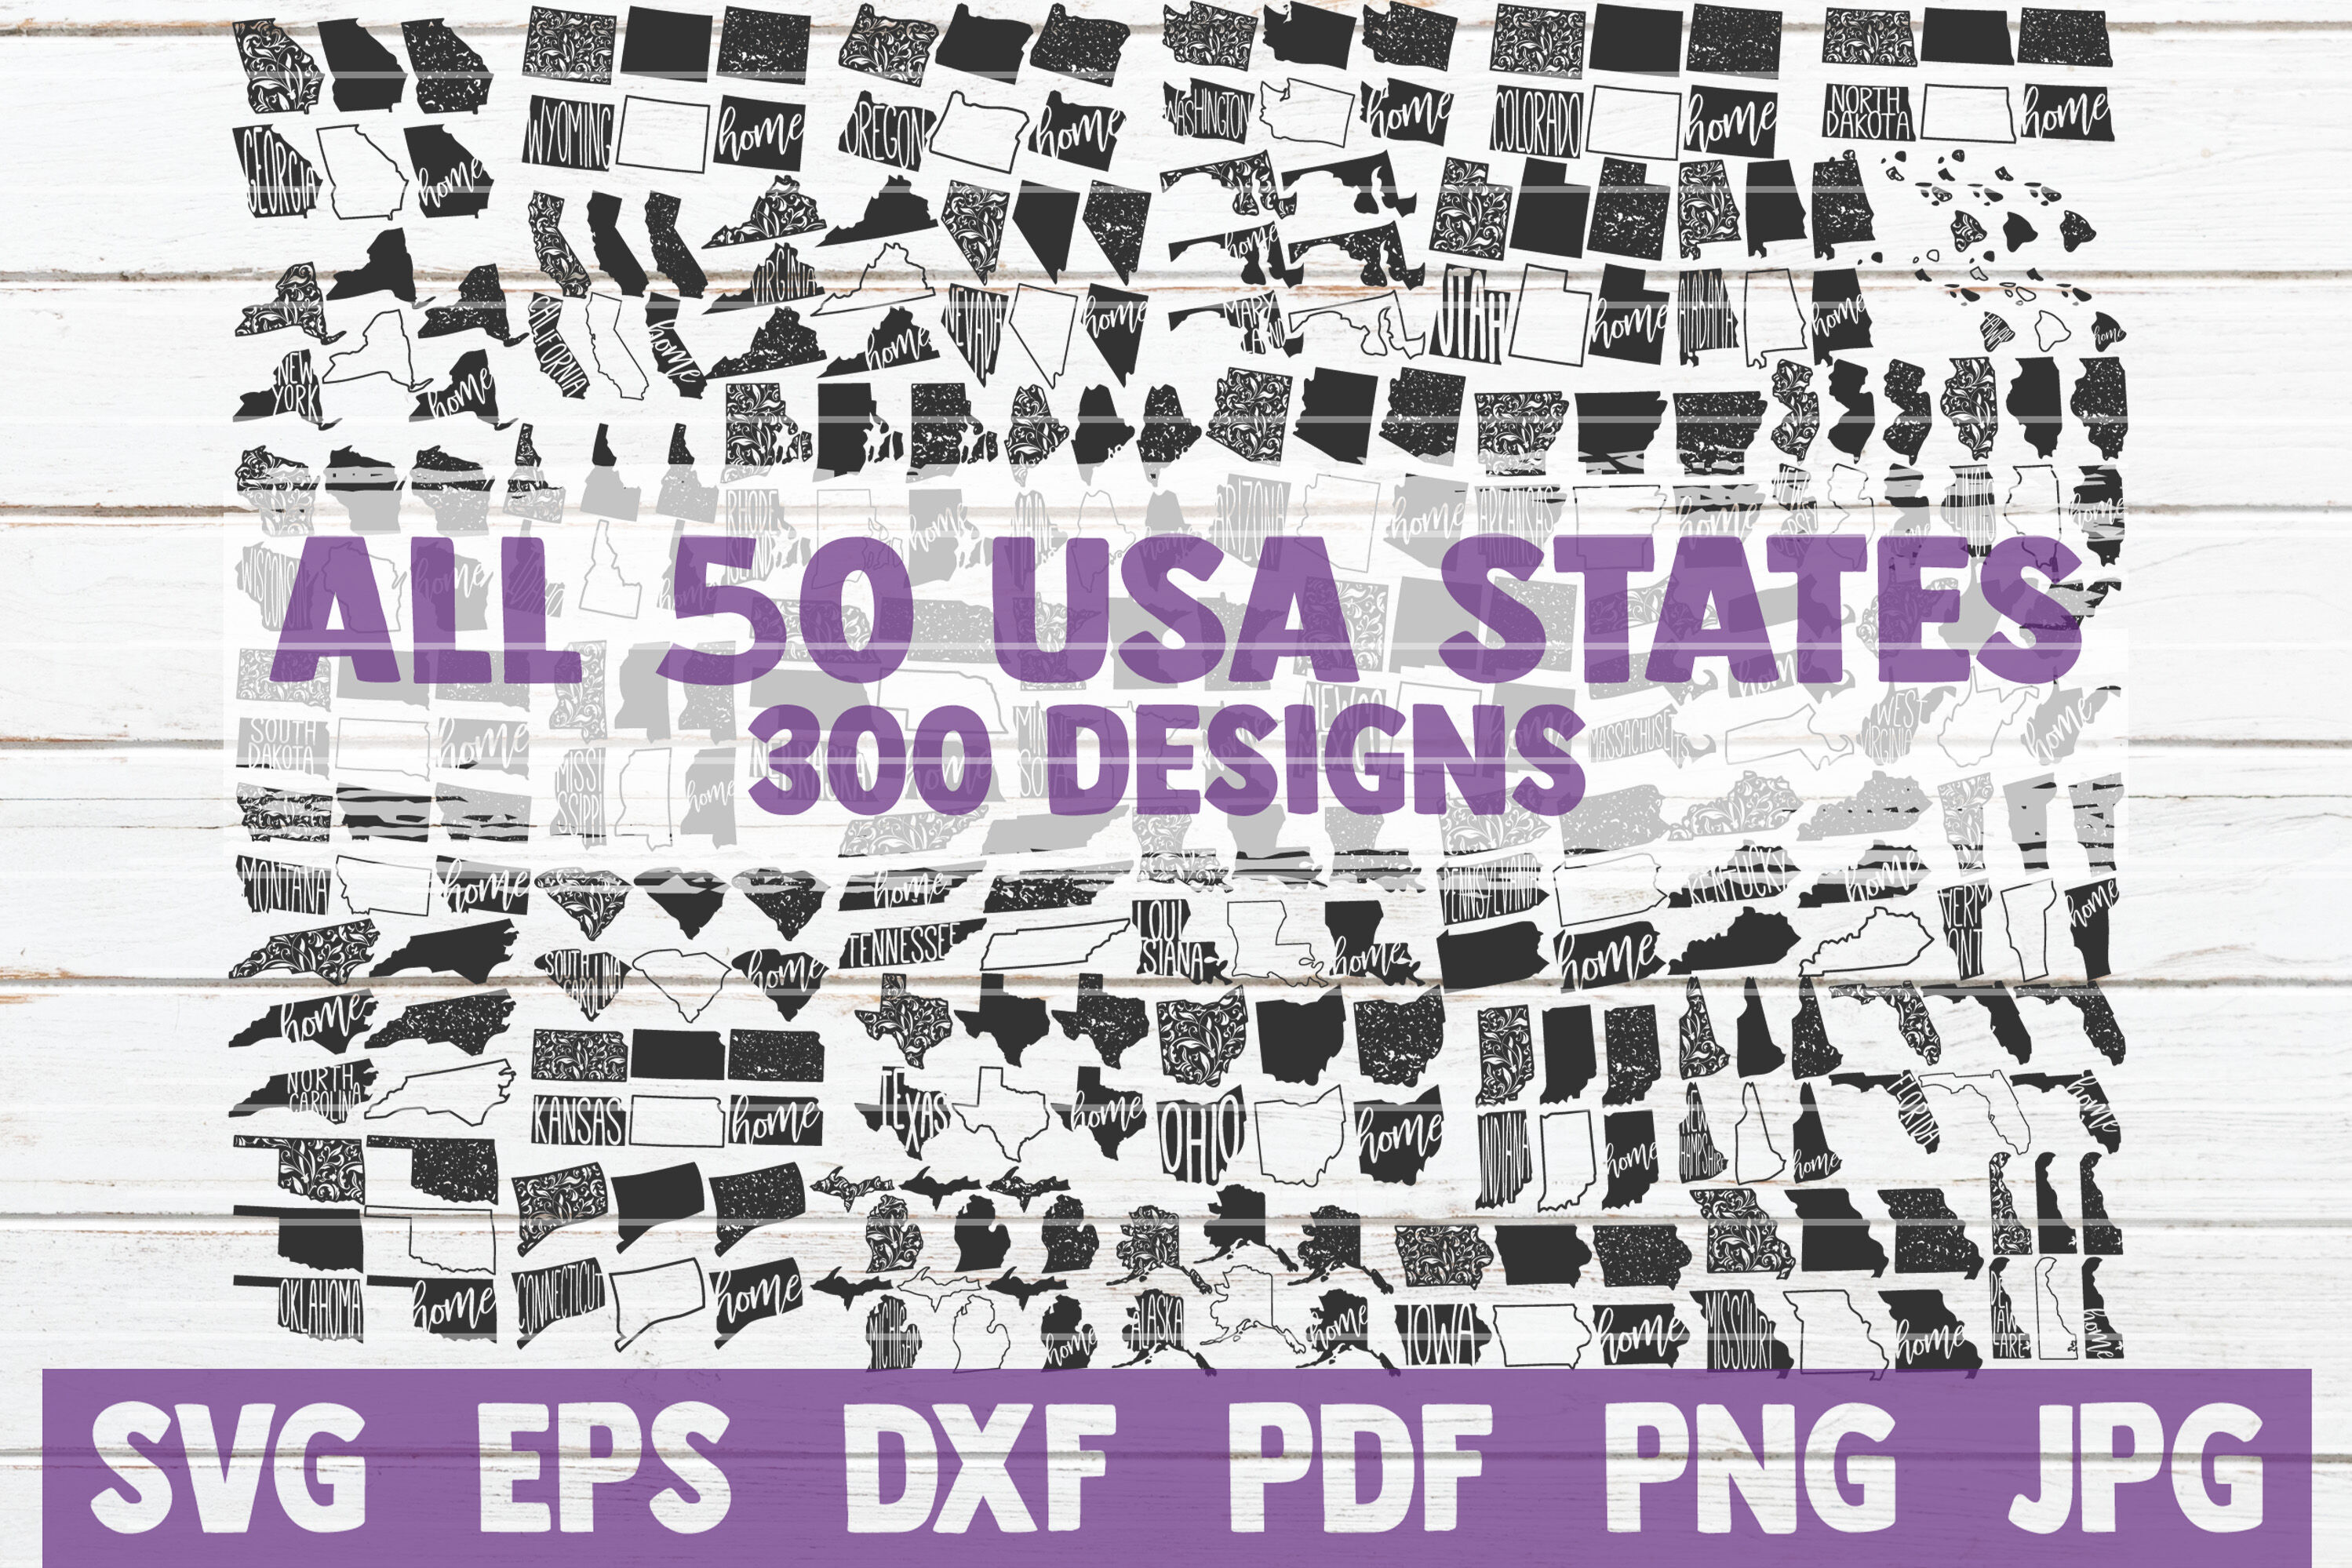 Home State Outline SVG File Bundle - All 50 States – Board